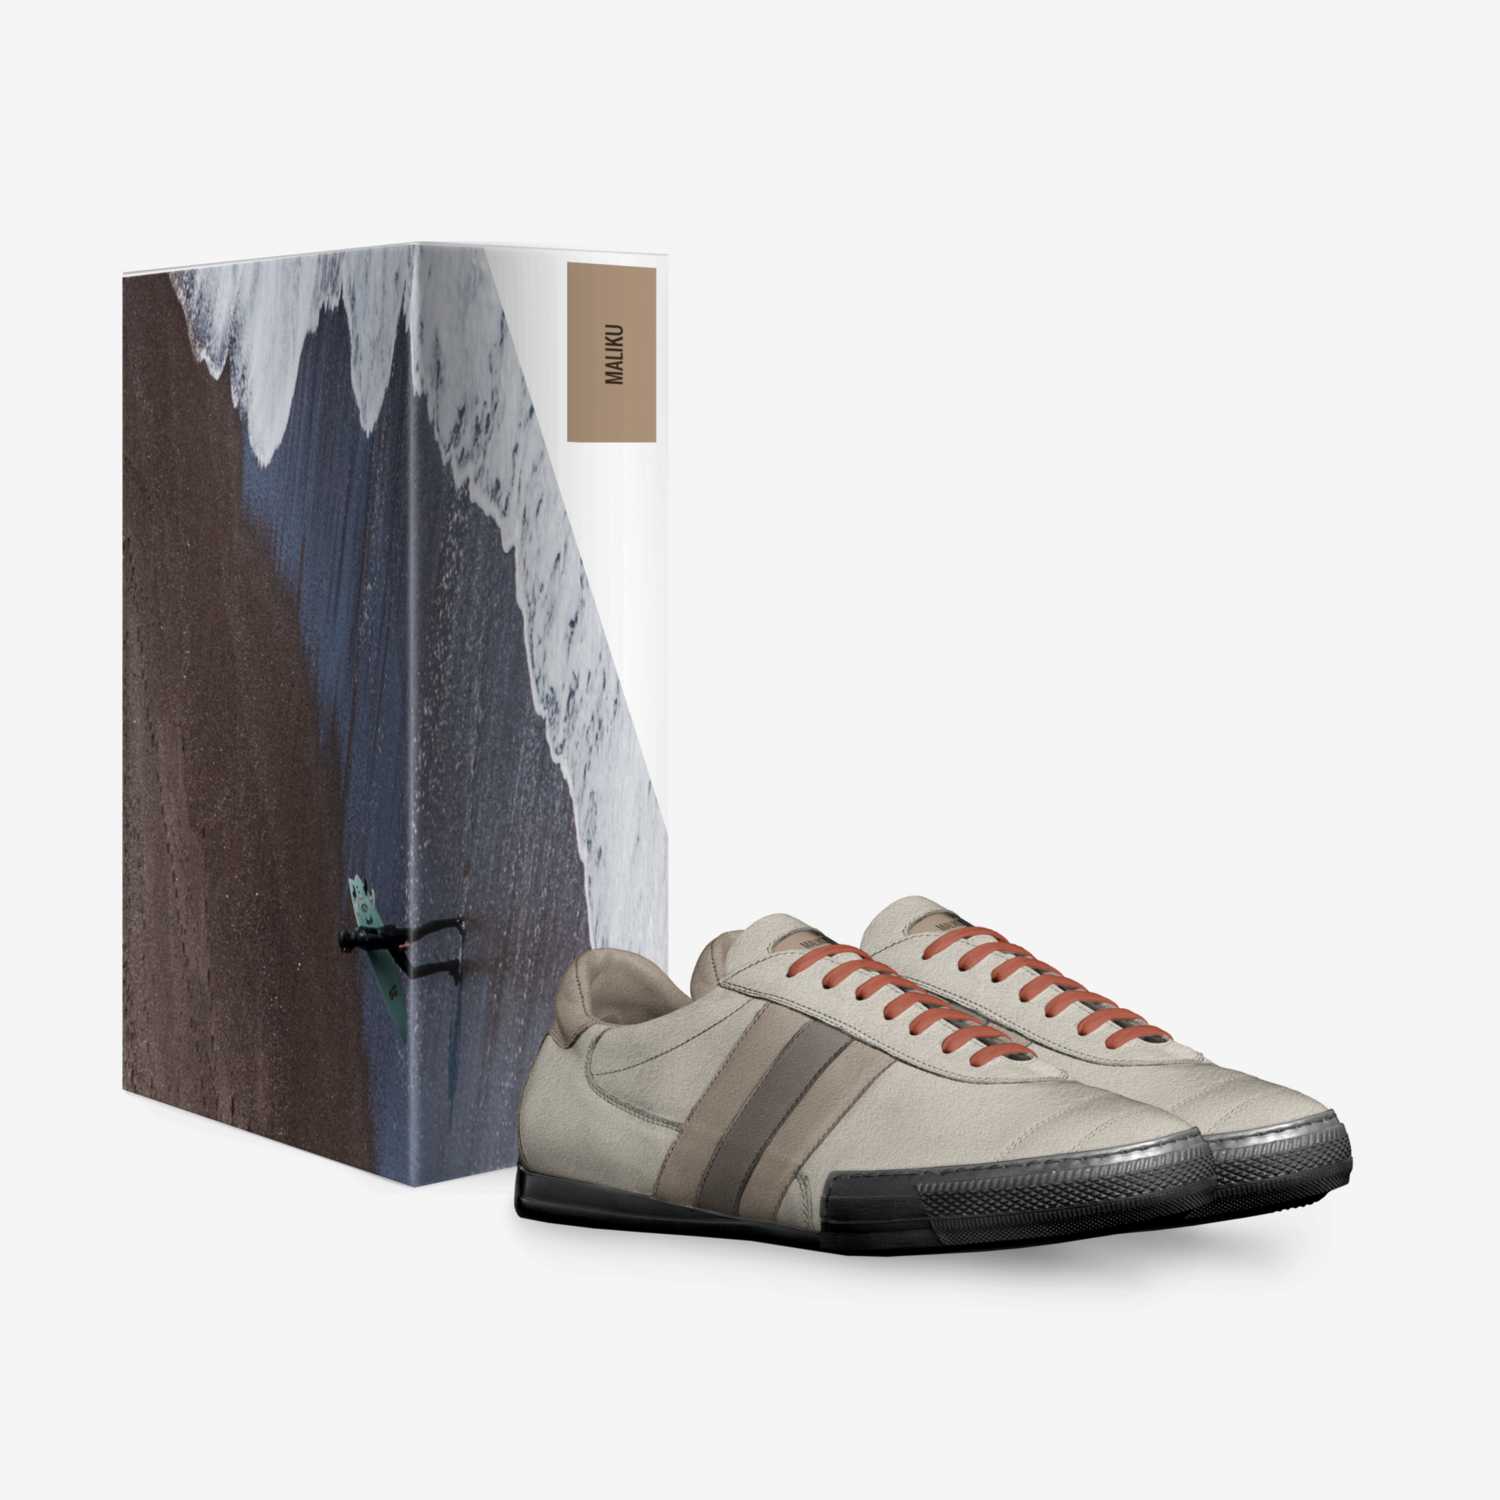 MALIKU custom made in Italy shoes by Meliza Rosado | Box view